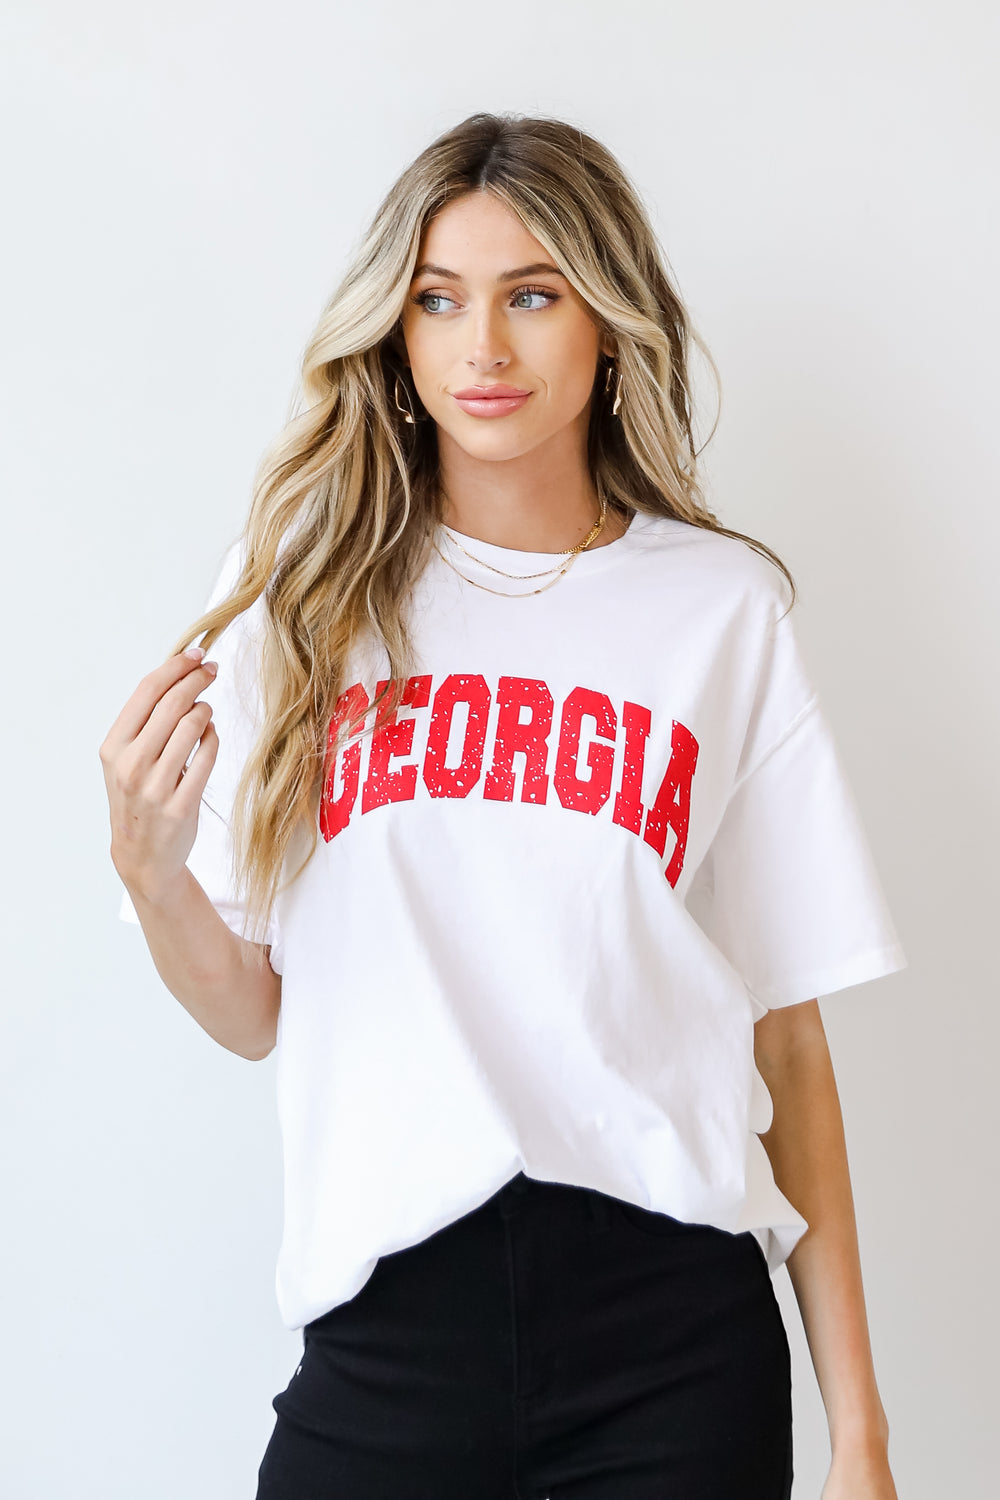 Georgia Tee in white